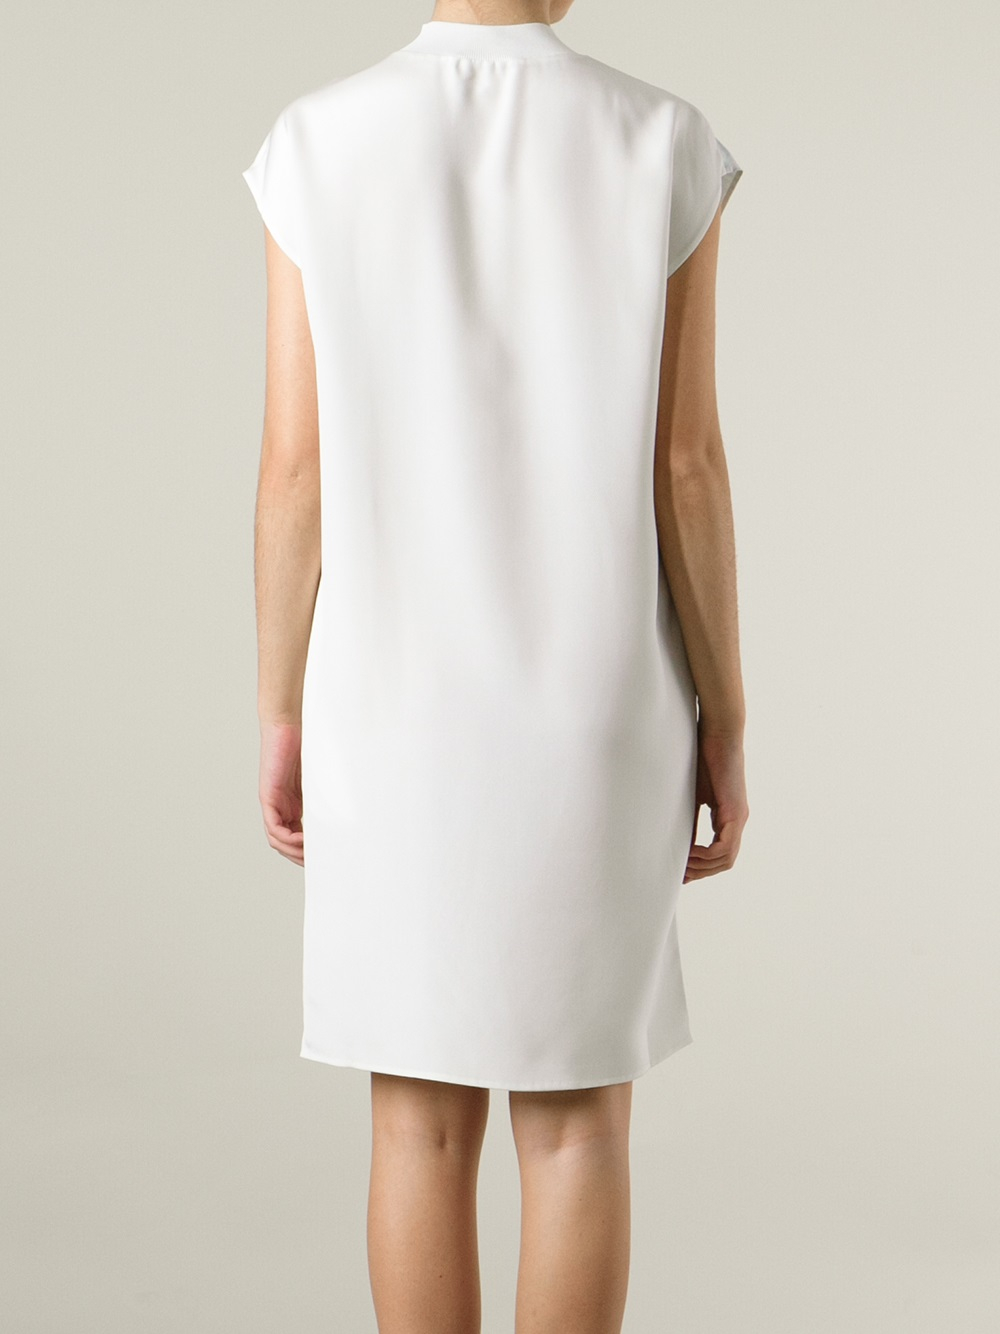 Lyst - 3.1 Phillip Lim Graphic Print Dress in White